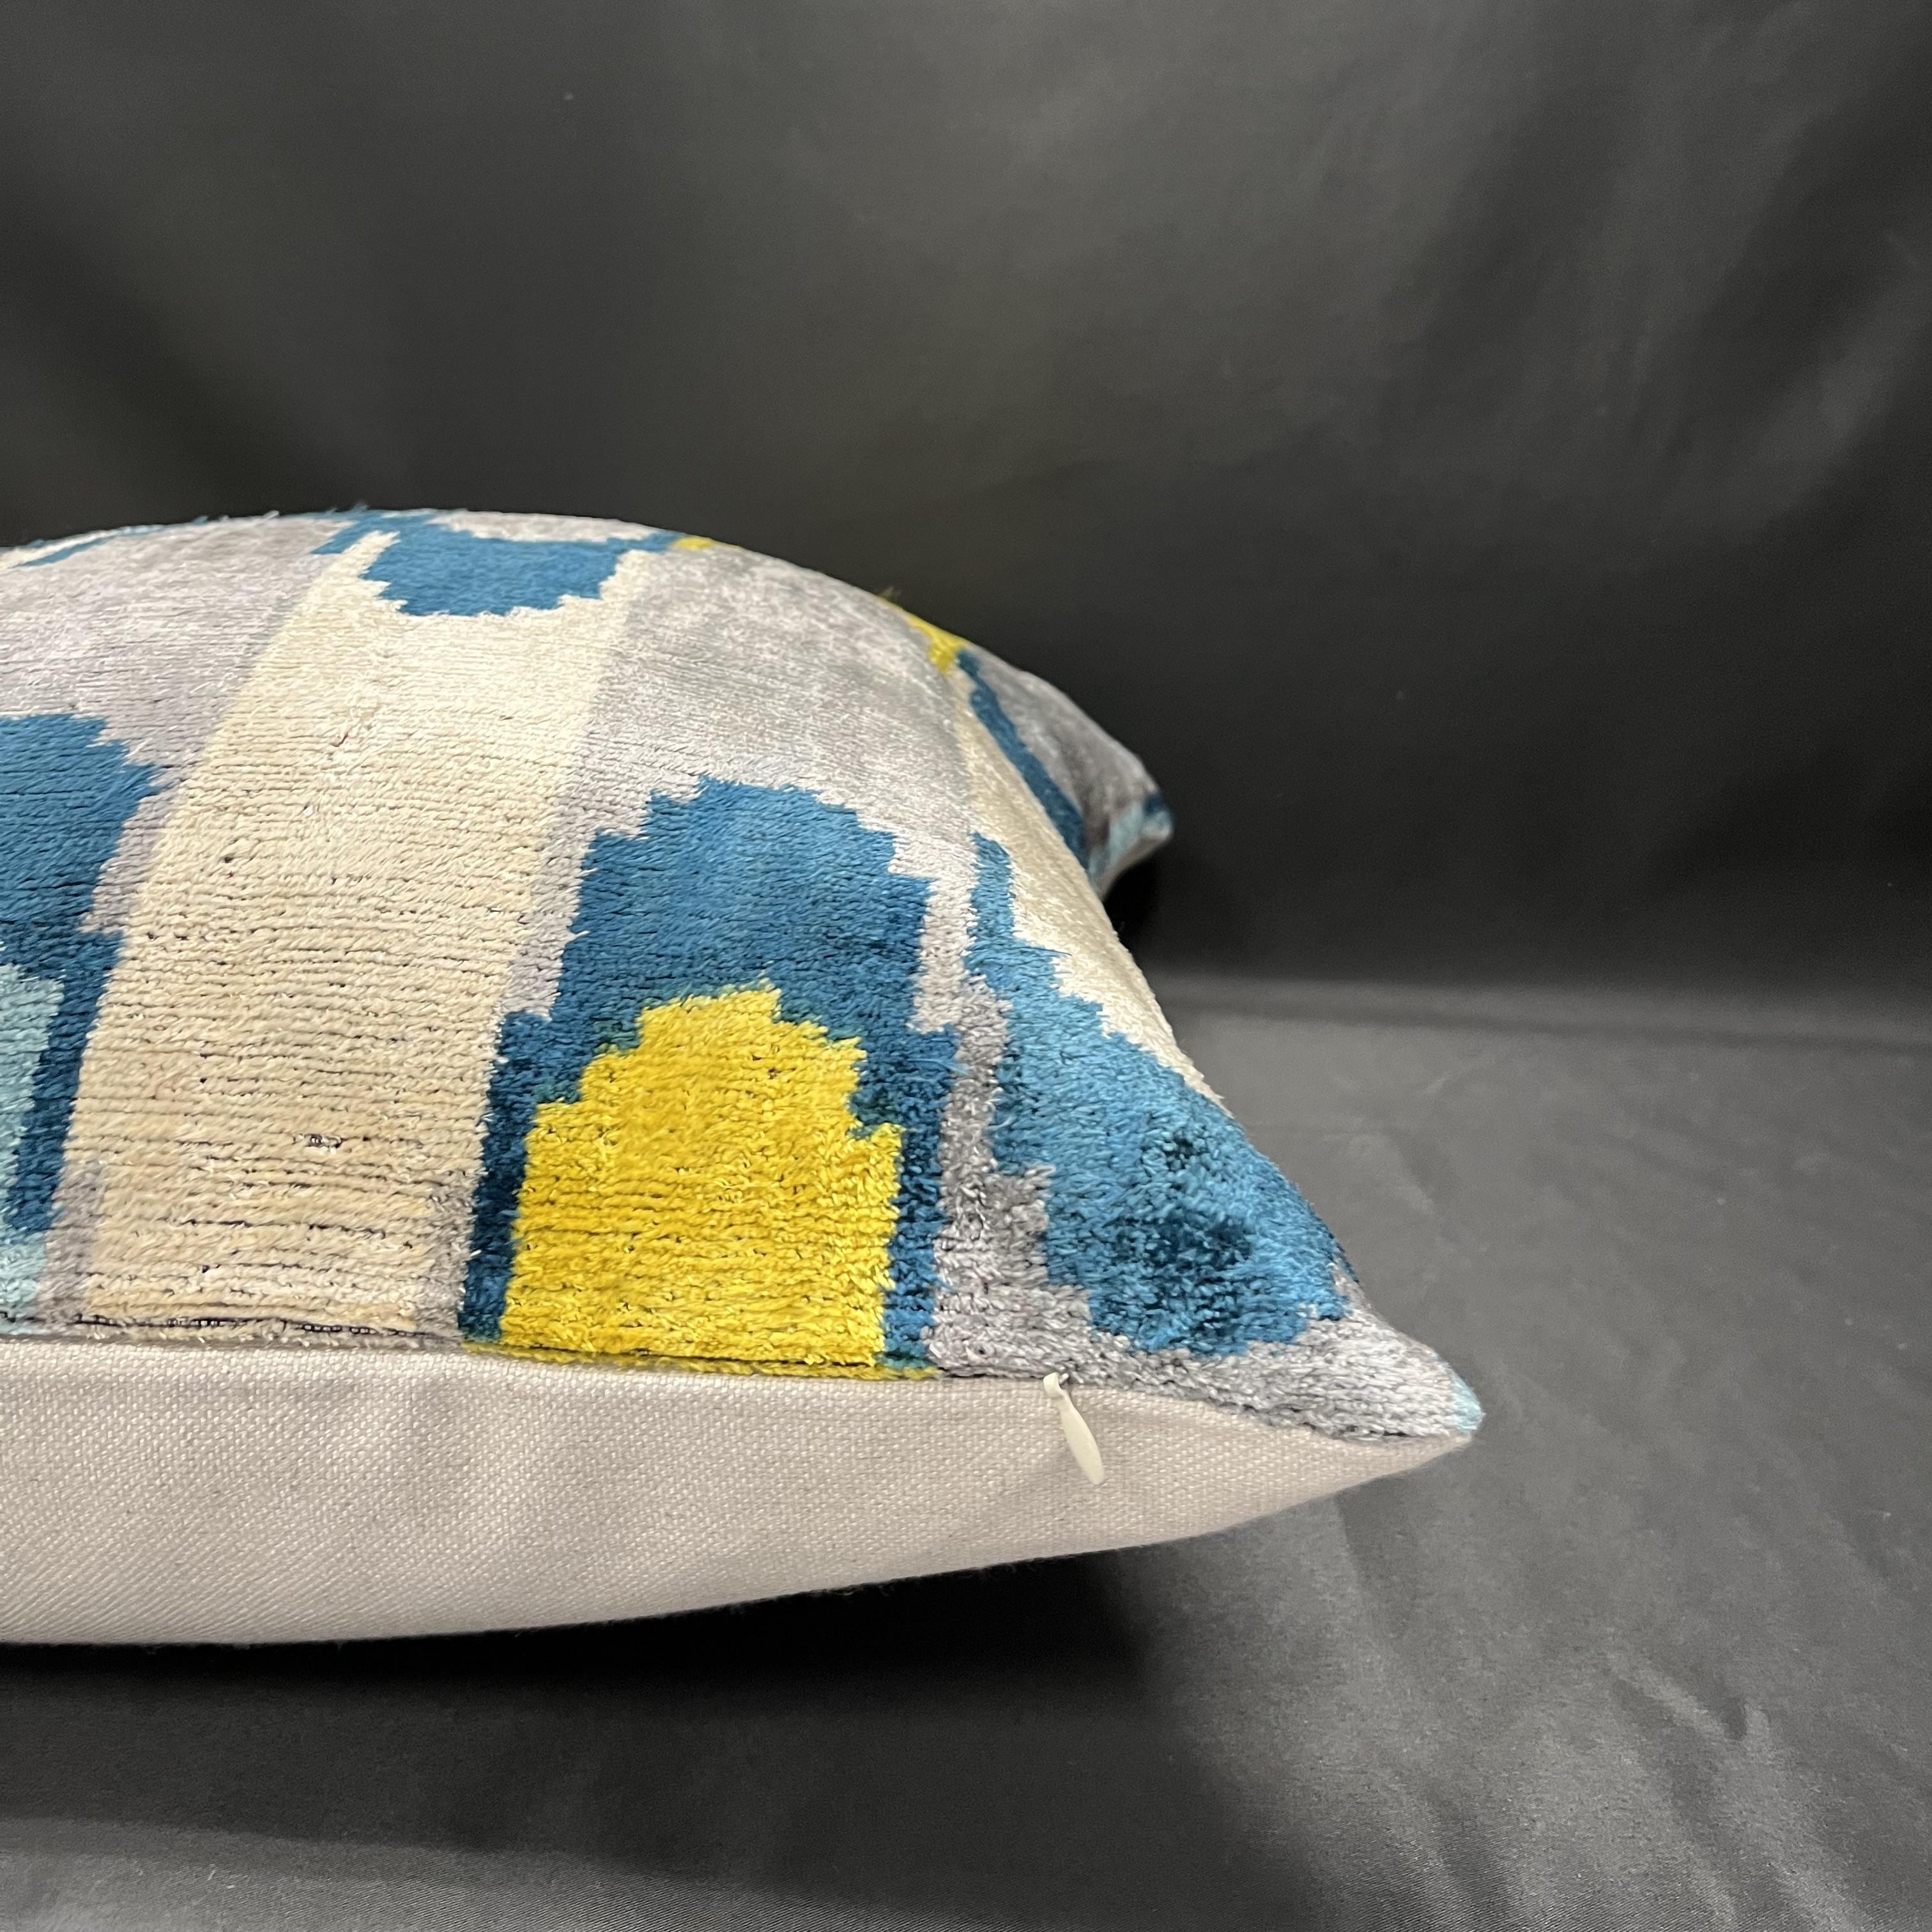 Velvet Silk Ikat Pillow Cover with Gray, Blue, Yellow Geometric Design 20